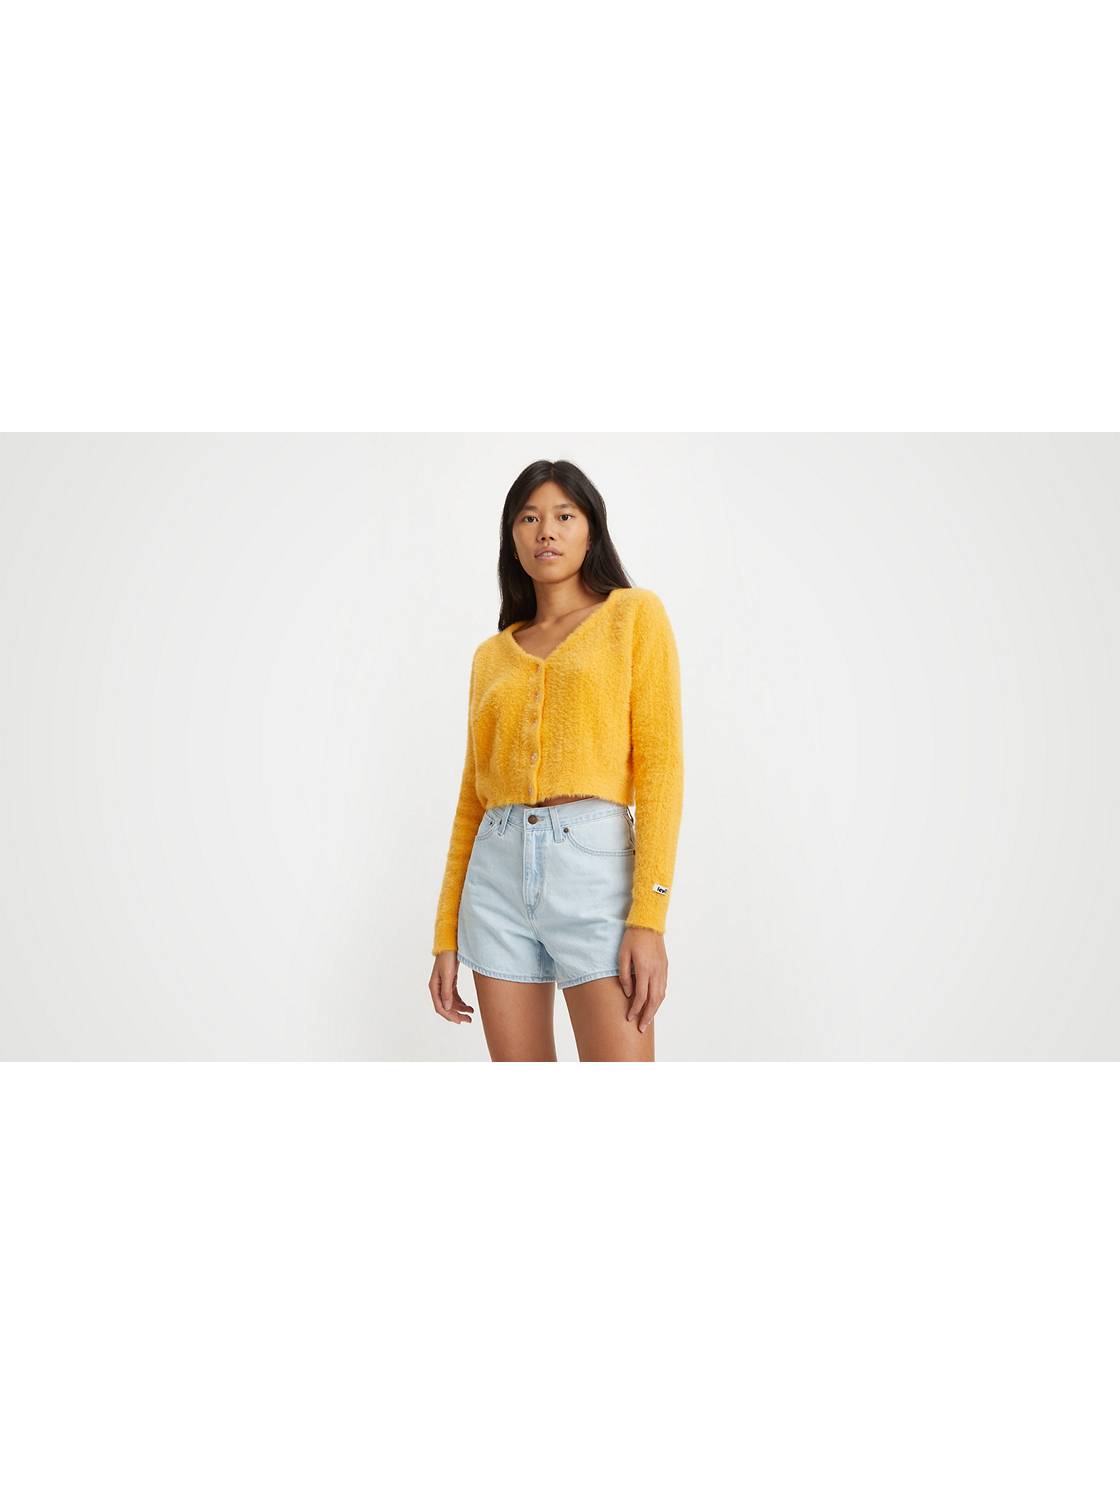 Women's Yellow Sweaters & Sweatshirts